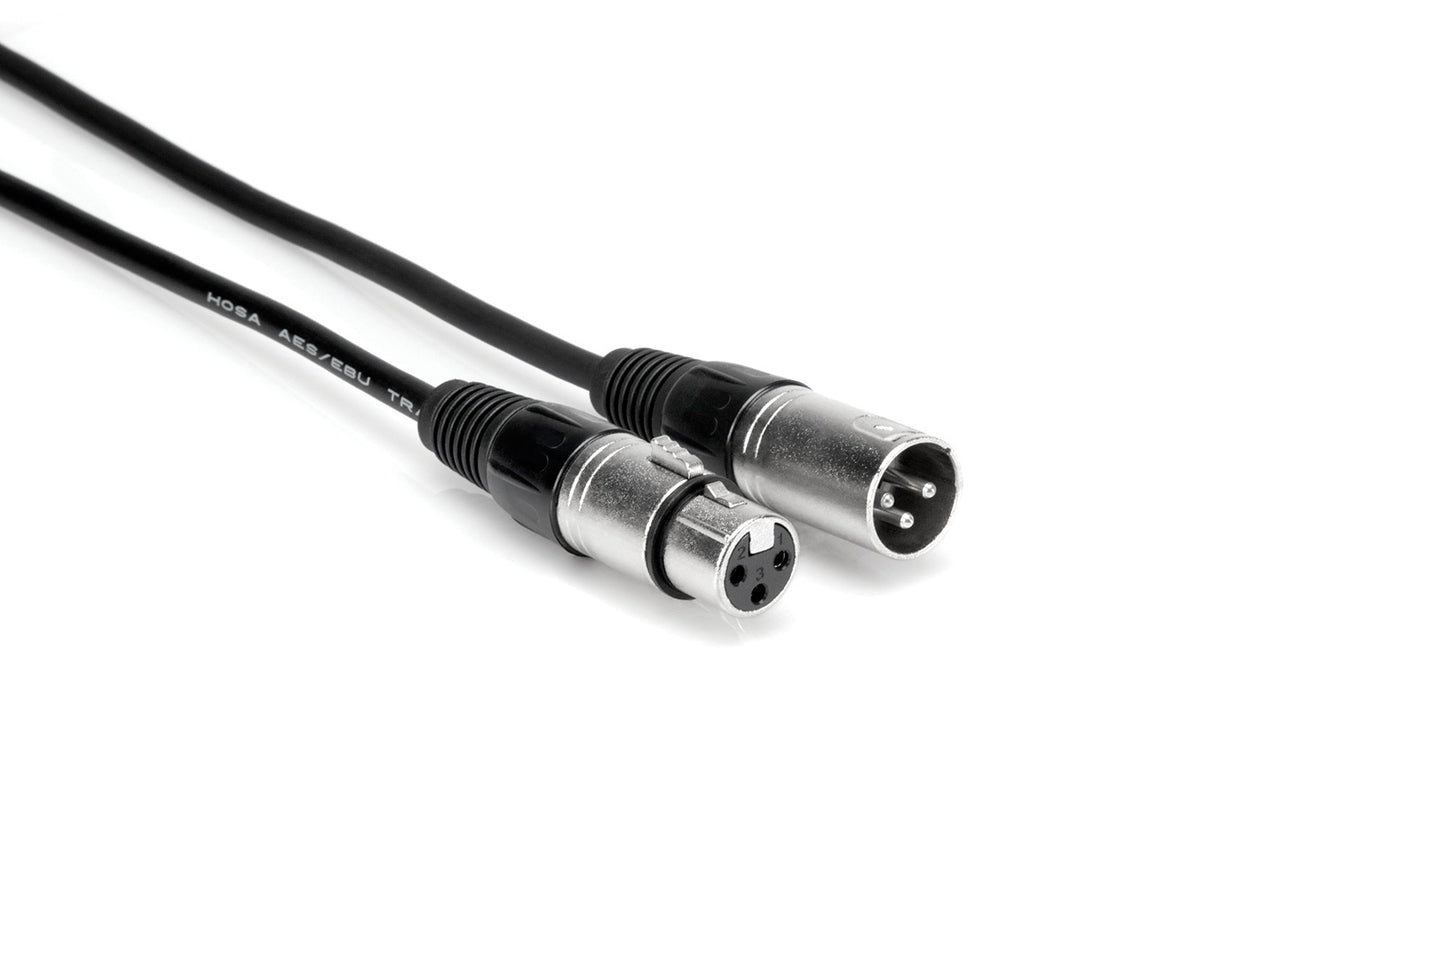 Hosa Technology AES/EBU Digital Audio Cable XLR to XLR - 20 ft